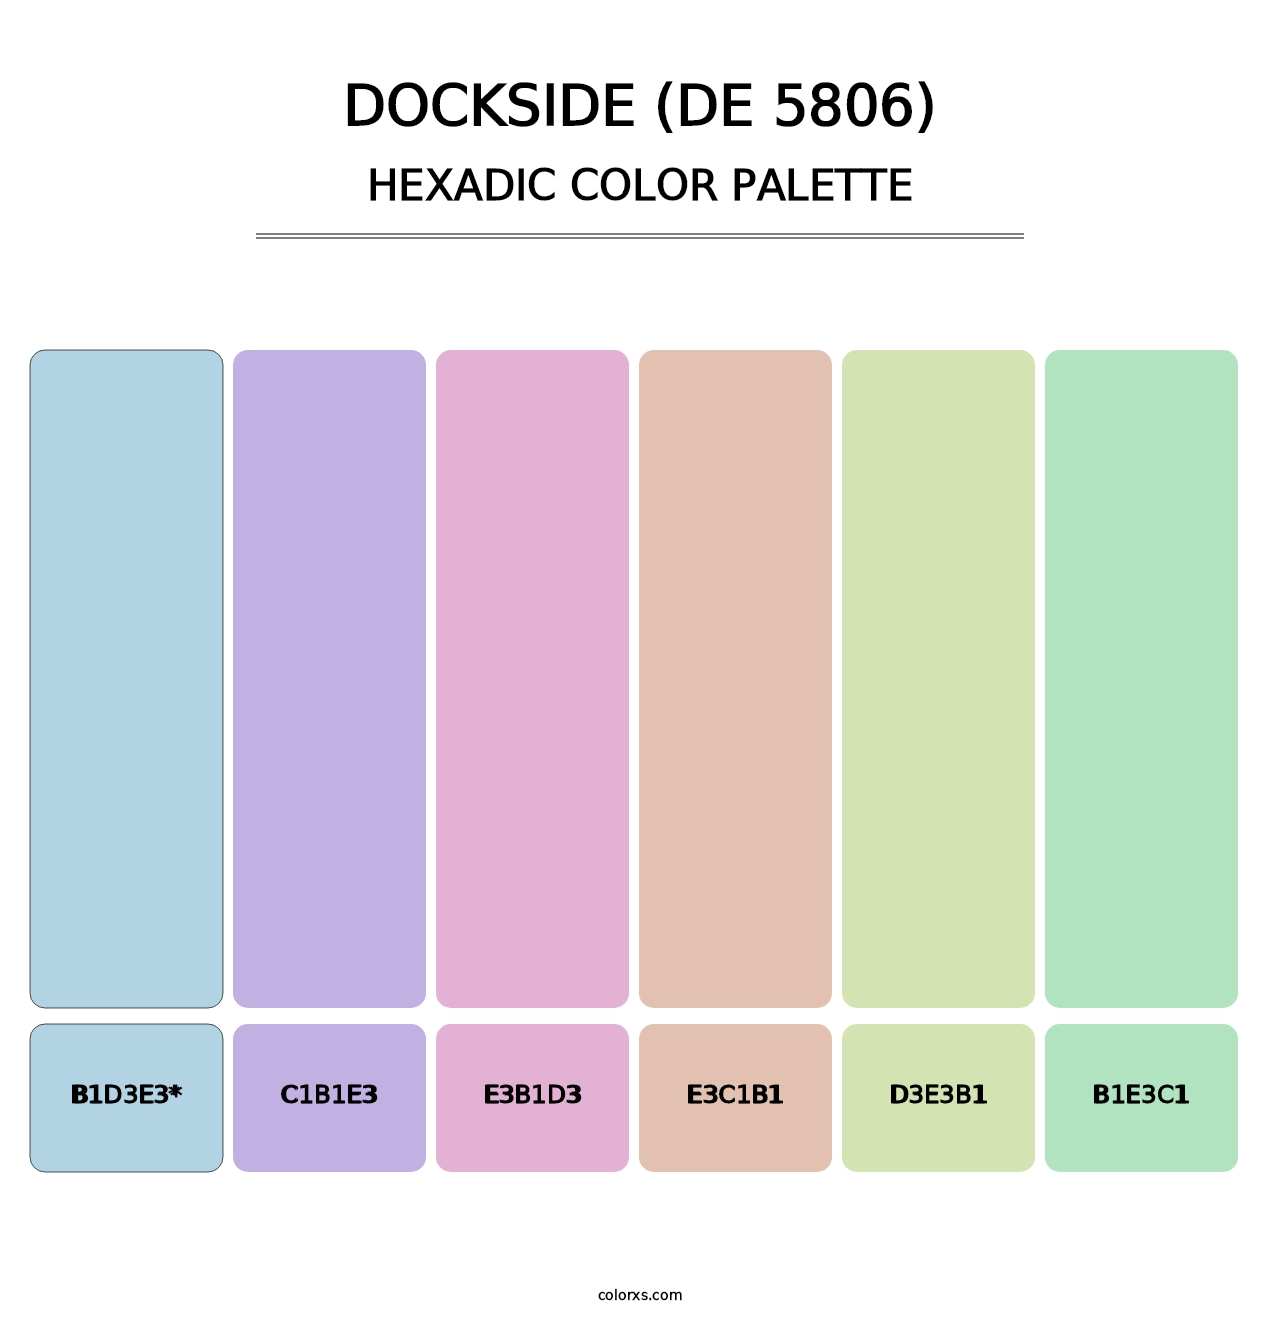 Dockside (DE 5806) - Hexadic Color Palette